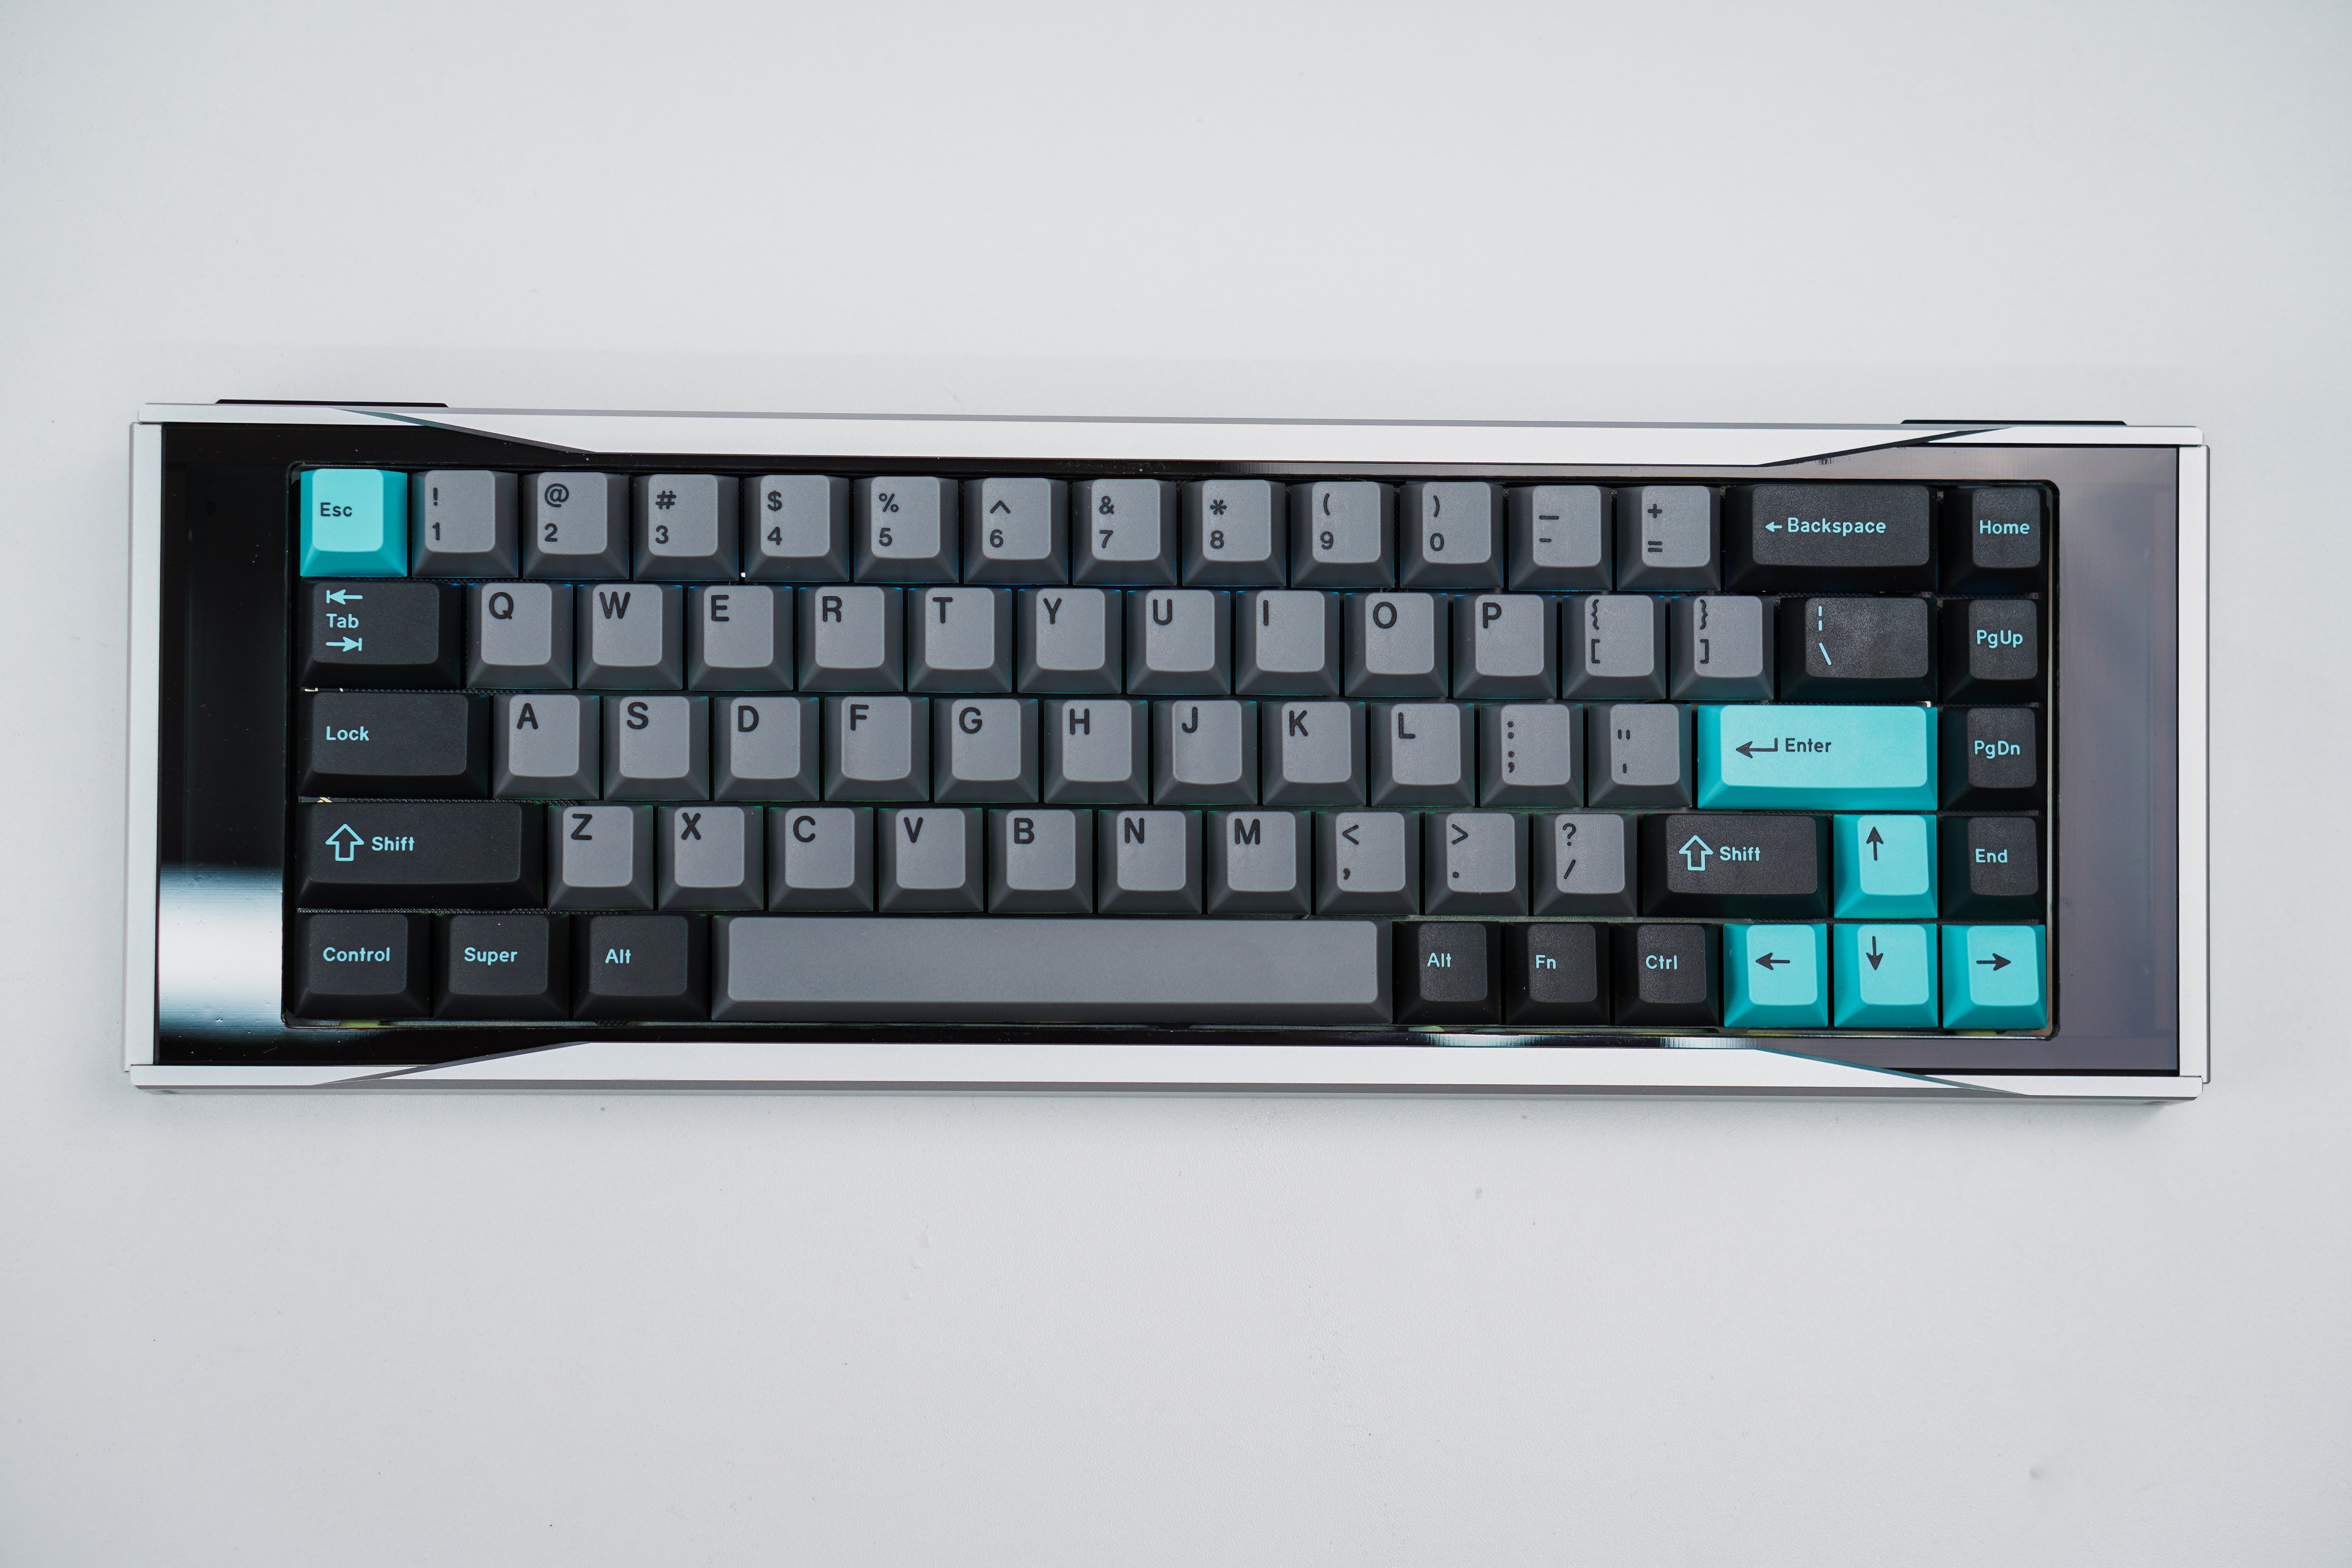 [In Stock] Lelelab Maxum 65 x GMK Electric Prebuilt Ready to Use Keyboard